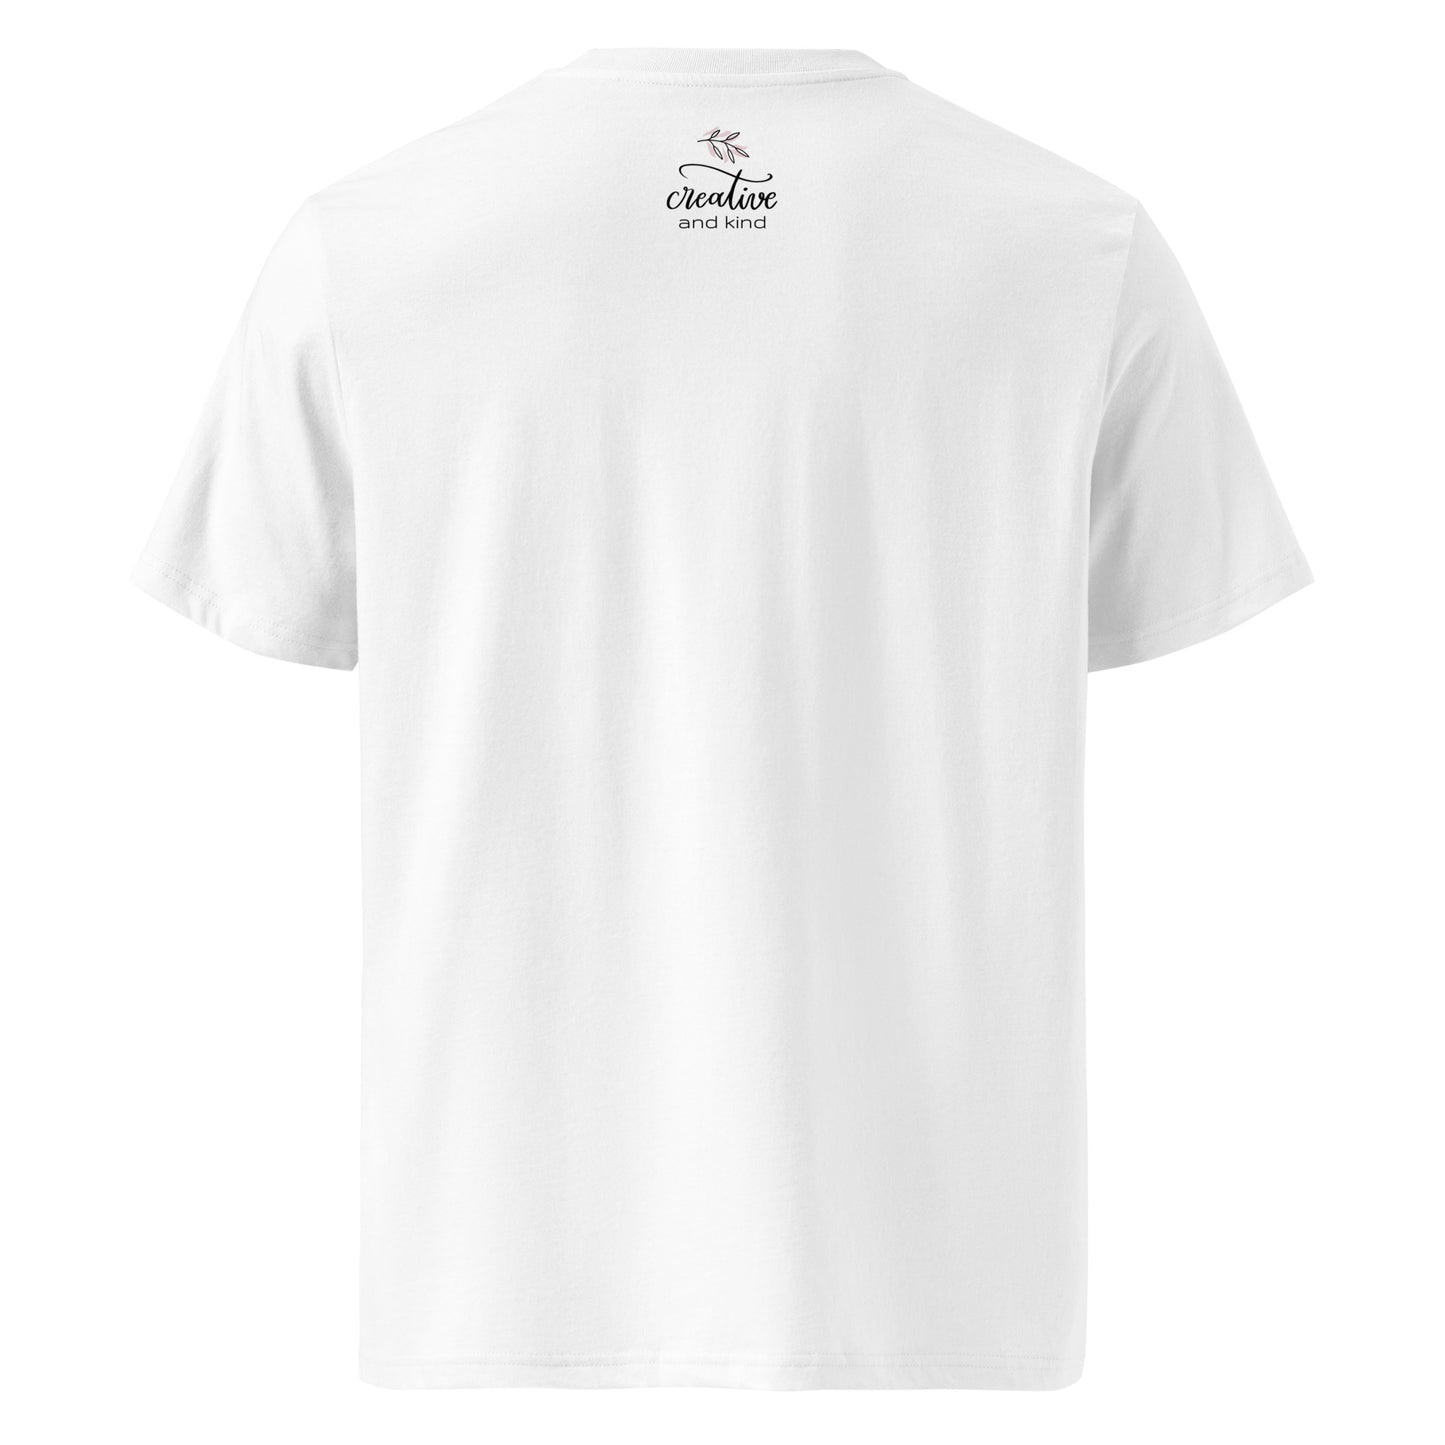 Unisex organic cotton t-shirt "Focus on the good stuff"